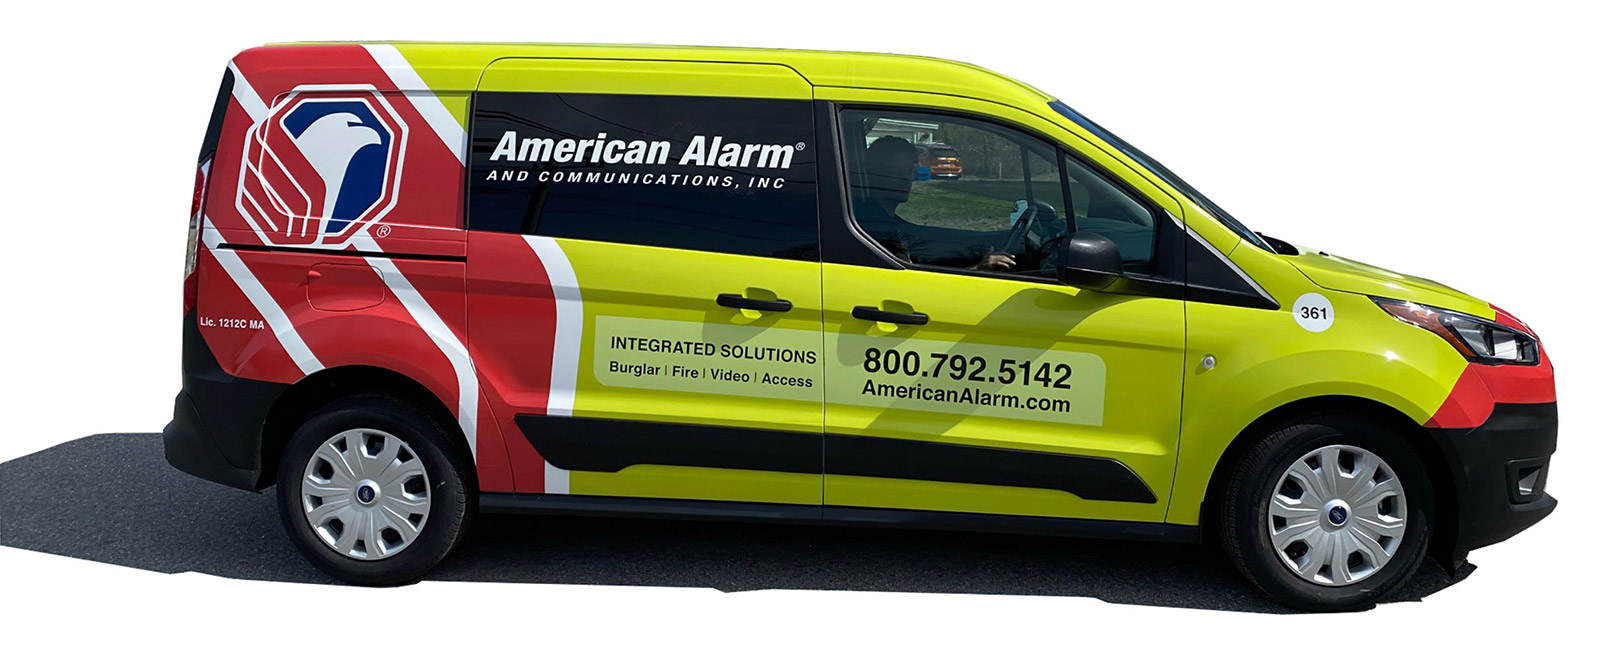 American Alarm van (after)